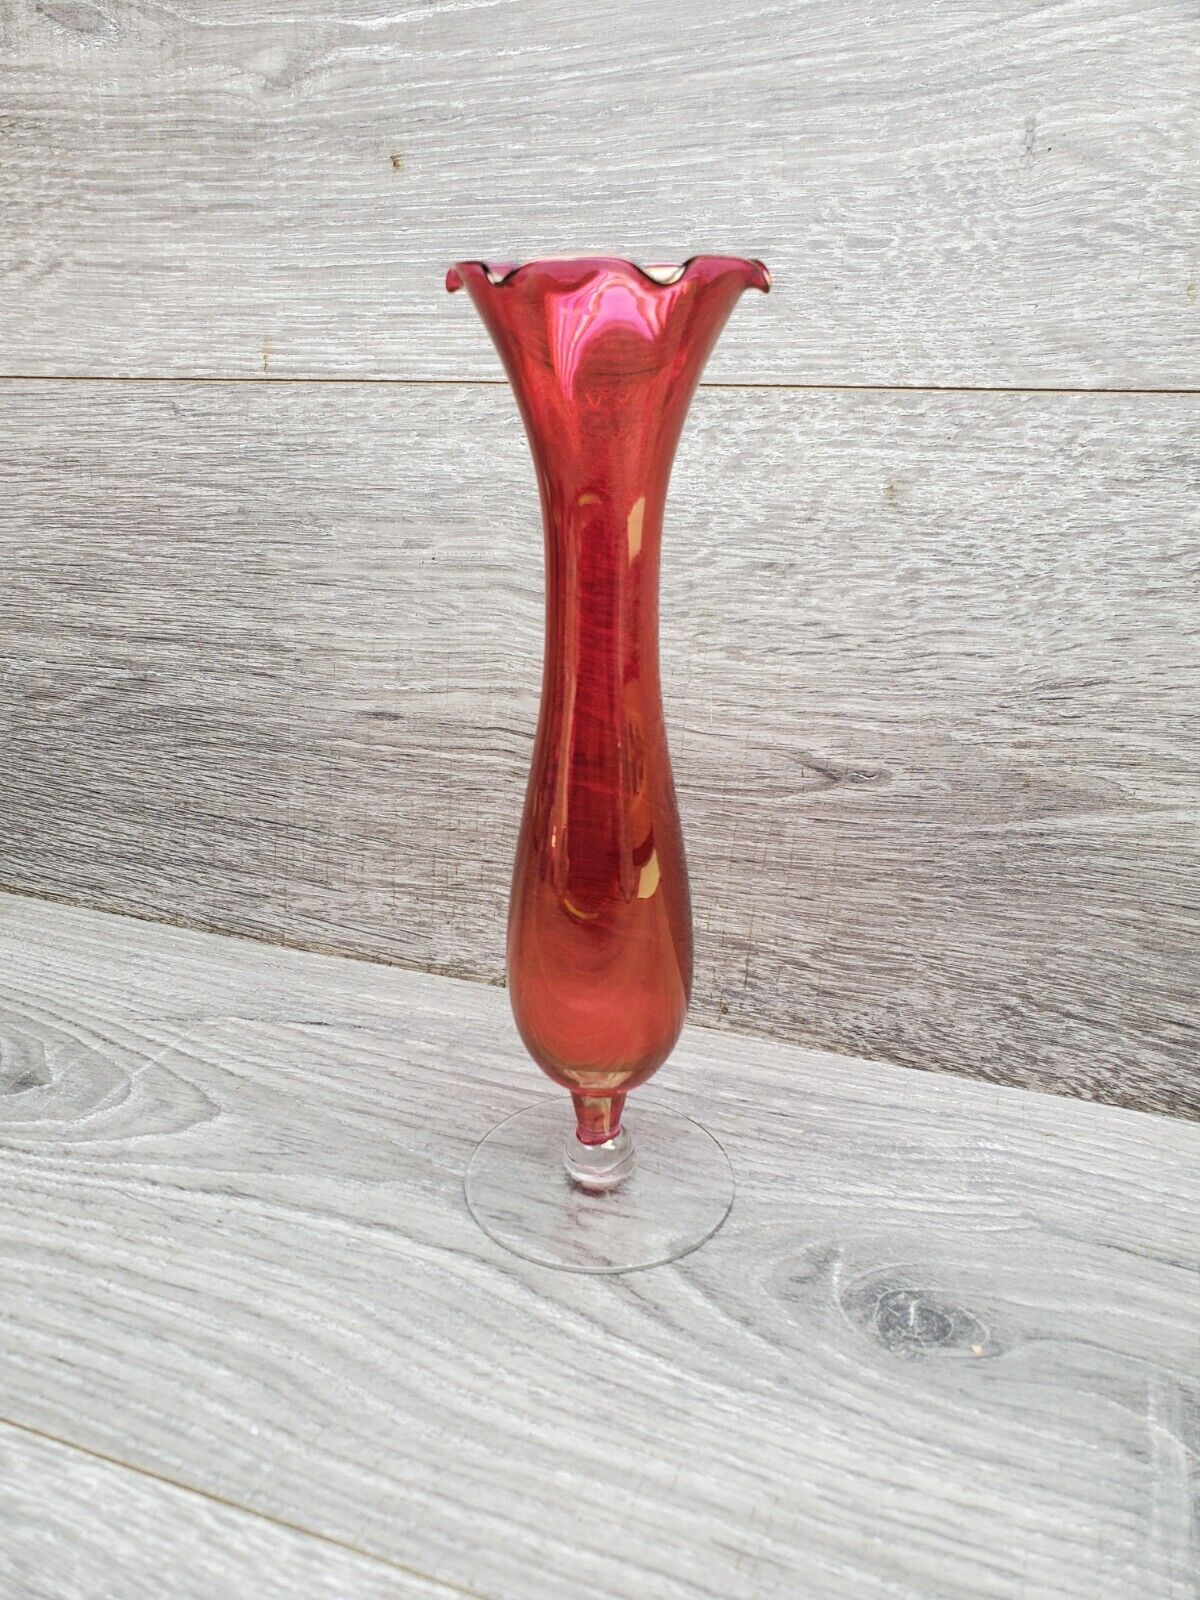 Red Bud Vase